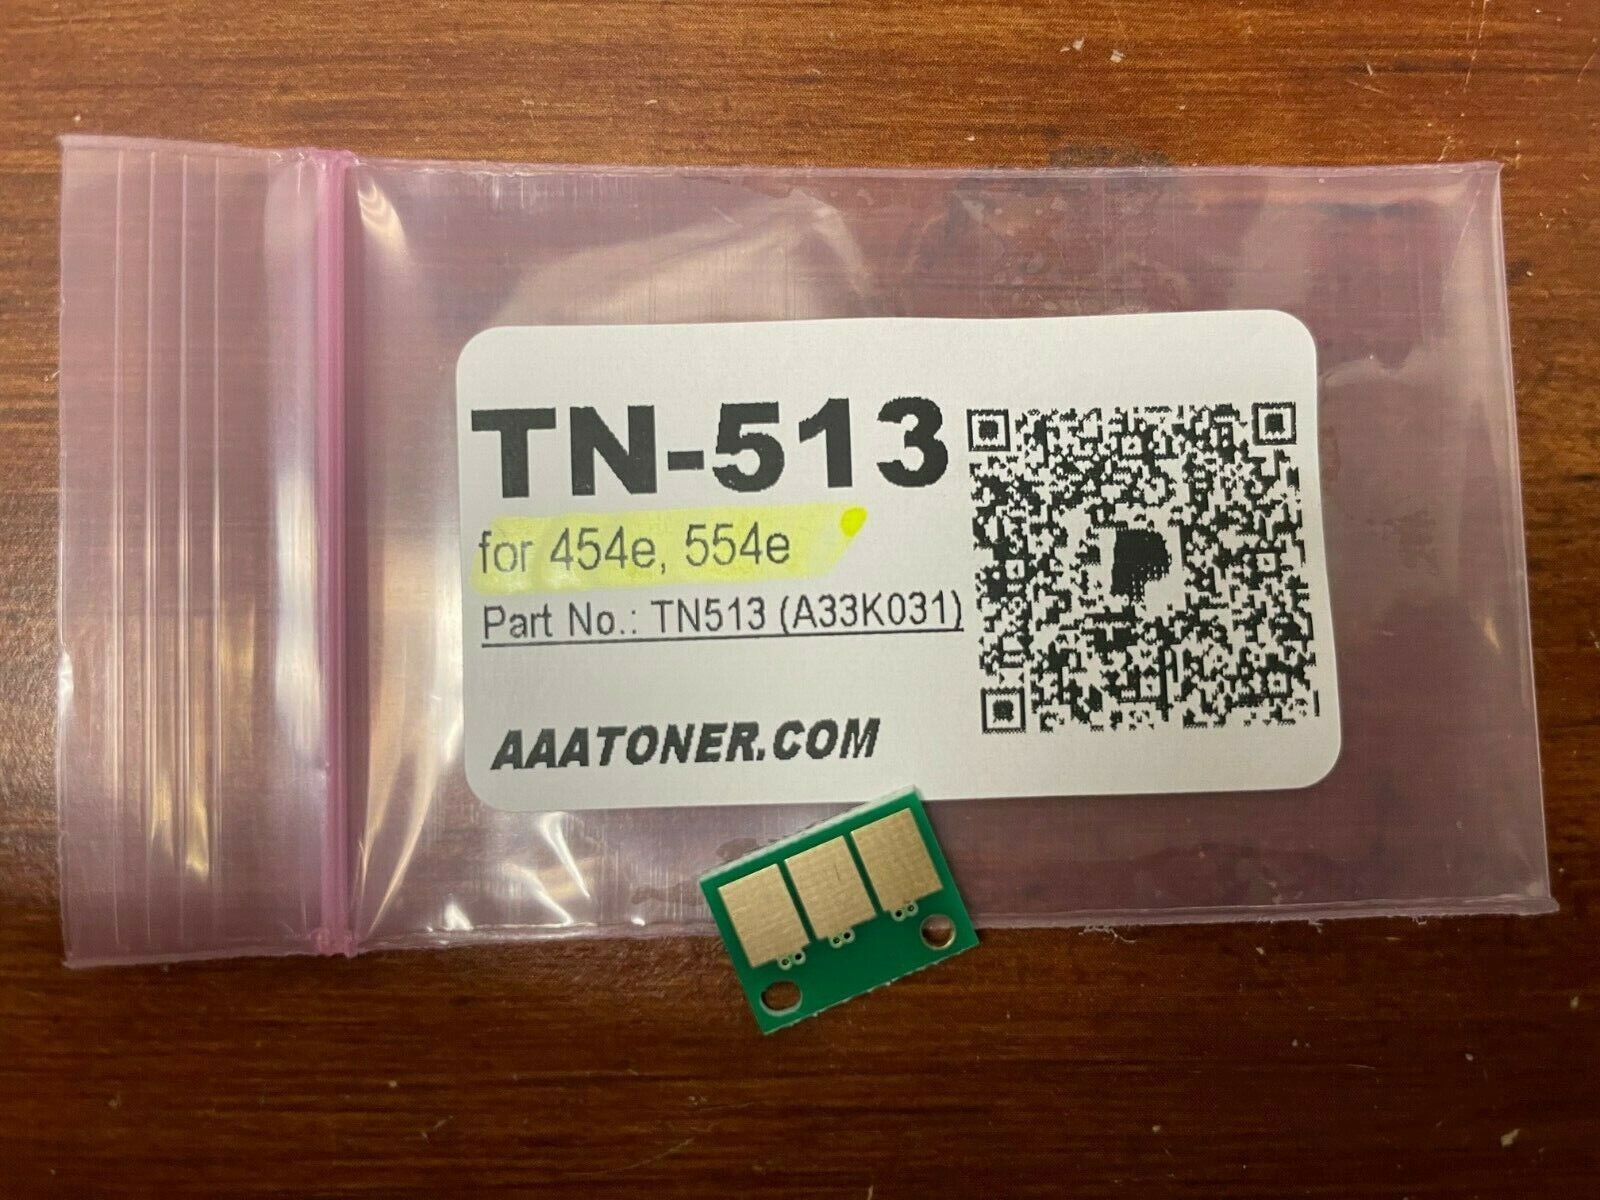 Toner Chip for Konica Minolta Bizhub 454e, 554e (TN513, TN-513) Refill